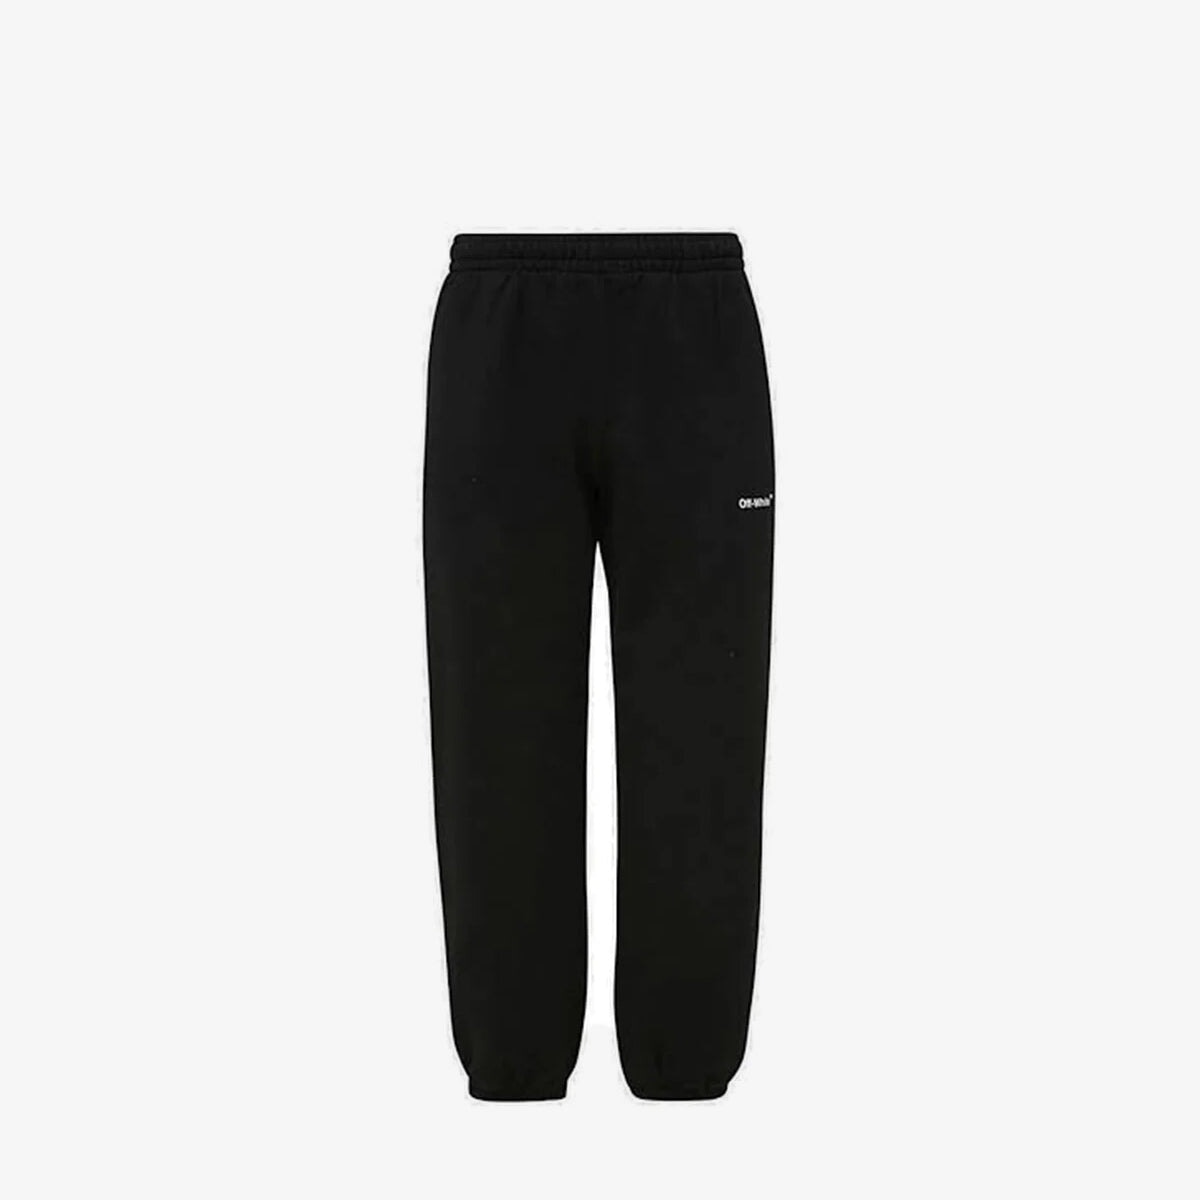 Off-White Sweatpants “Black” Sweatpants Off-White